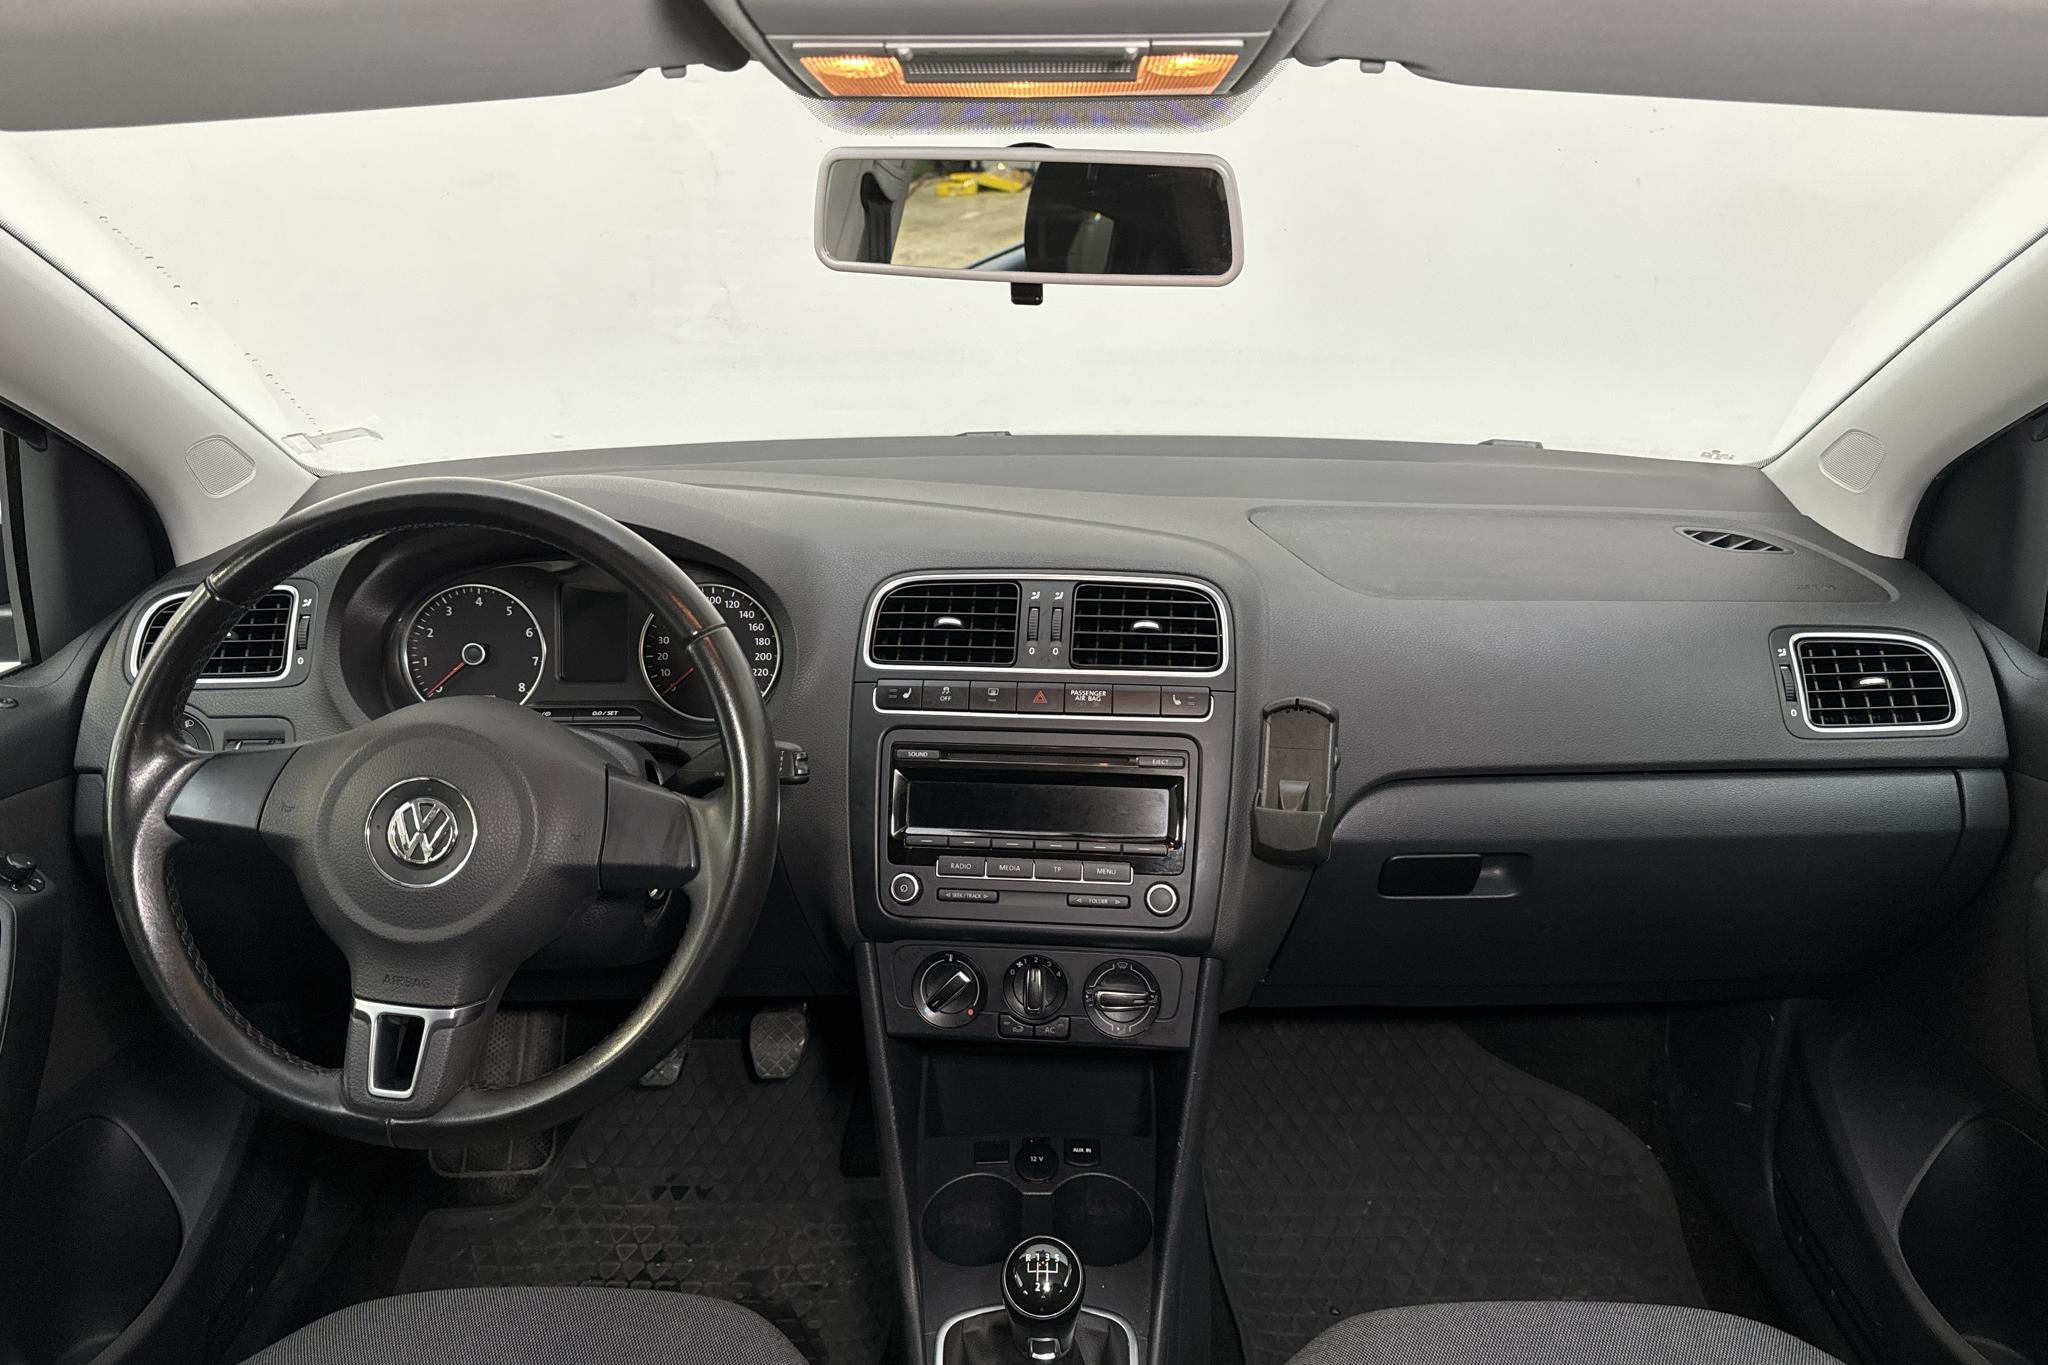 VW Polo 1.4 5dr (85hk) - 12 354 mil - Manuell - Dark Grey - 2014